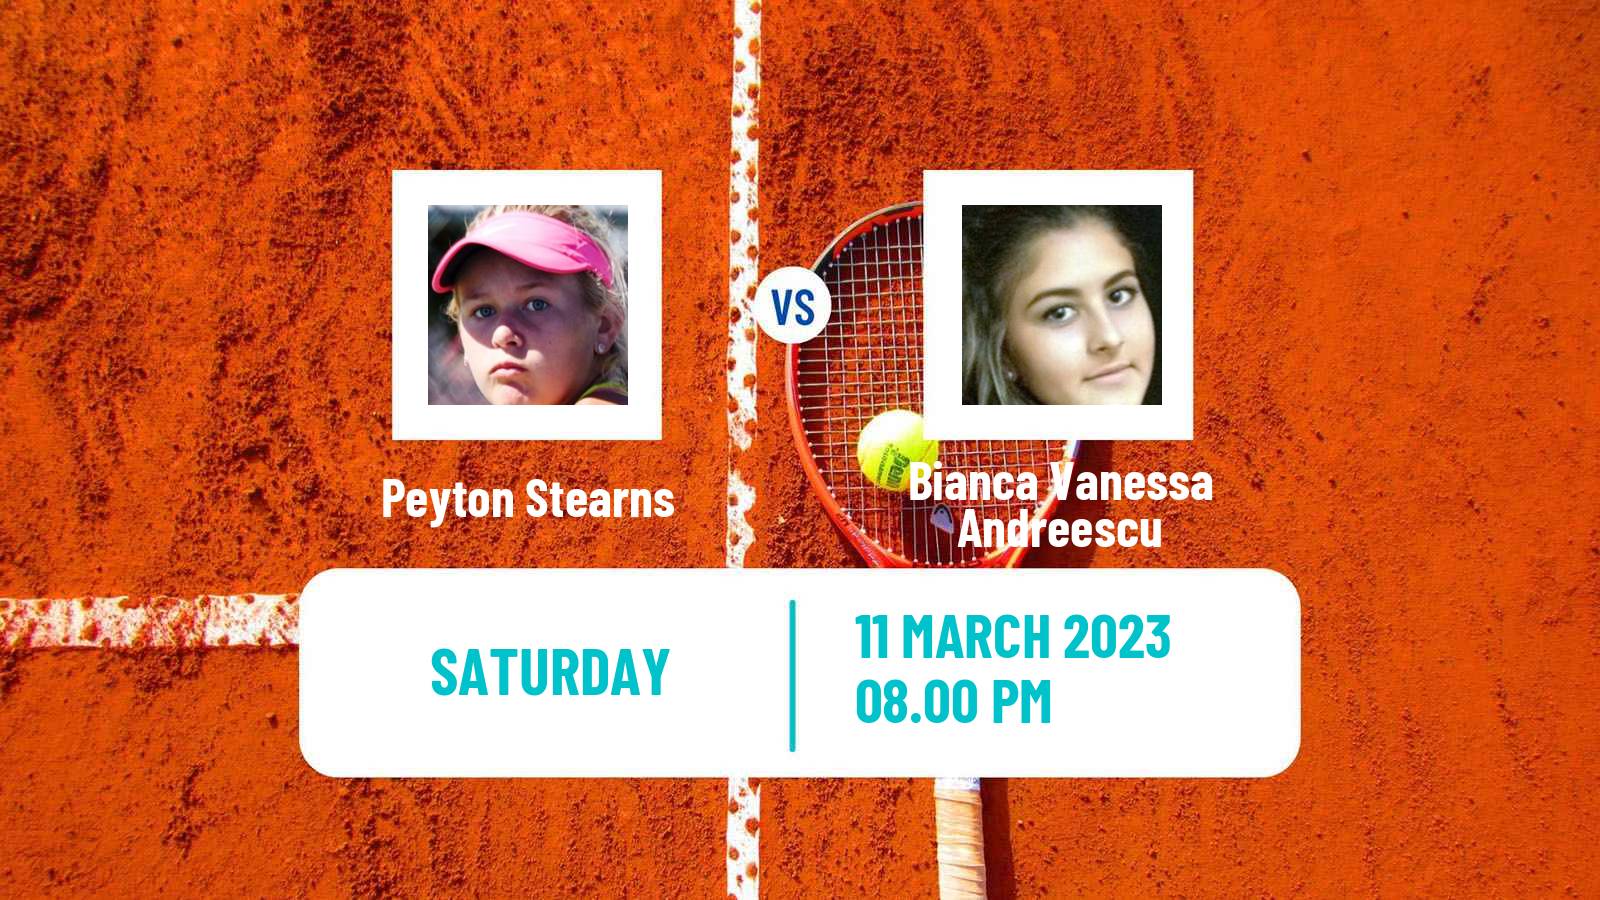 Tennis WTA Indian Wells Peyton Stearns - Bianca Vanessa Andreescu